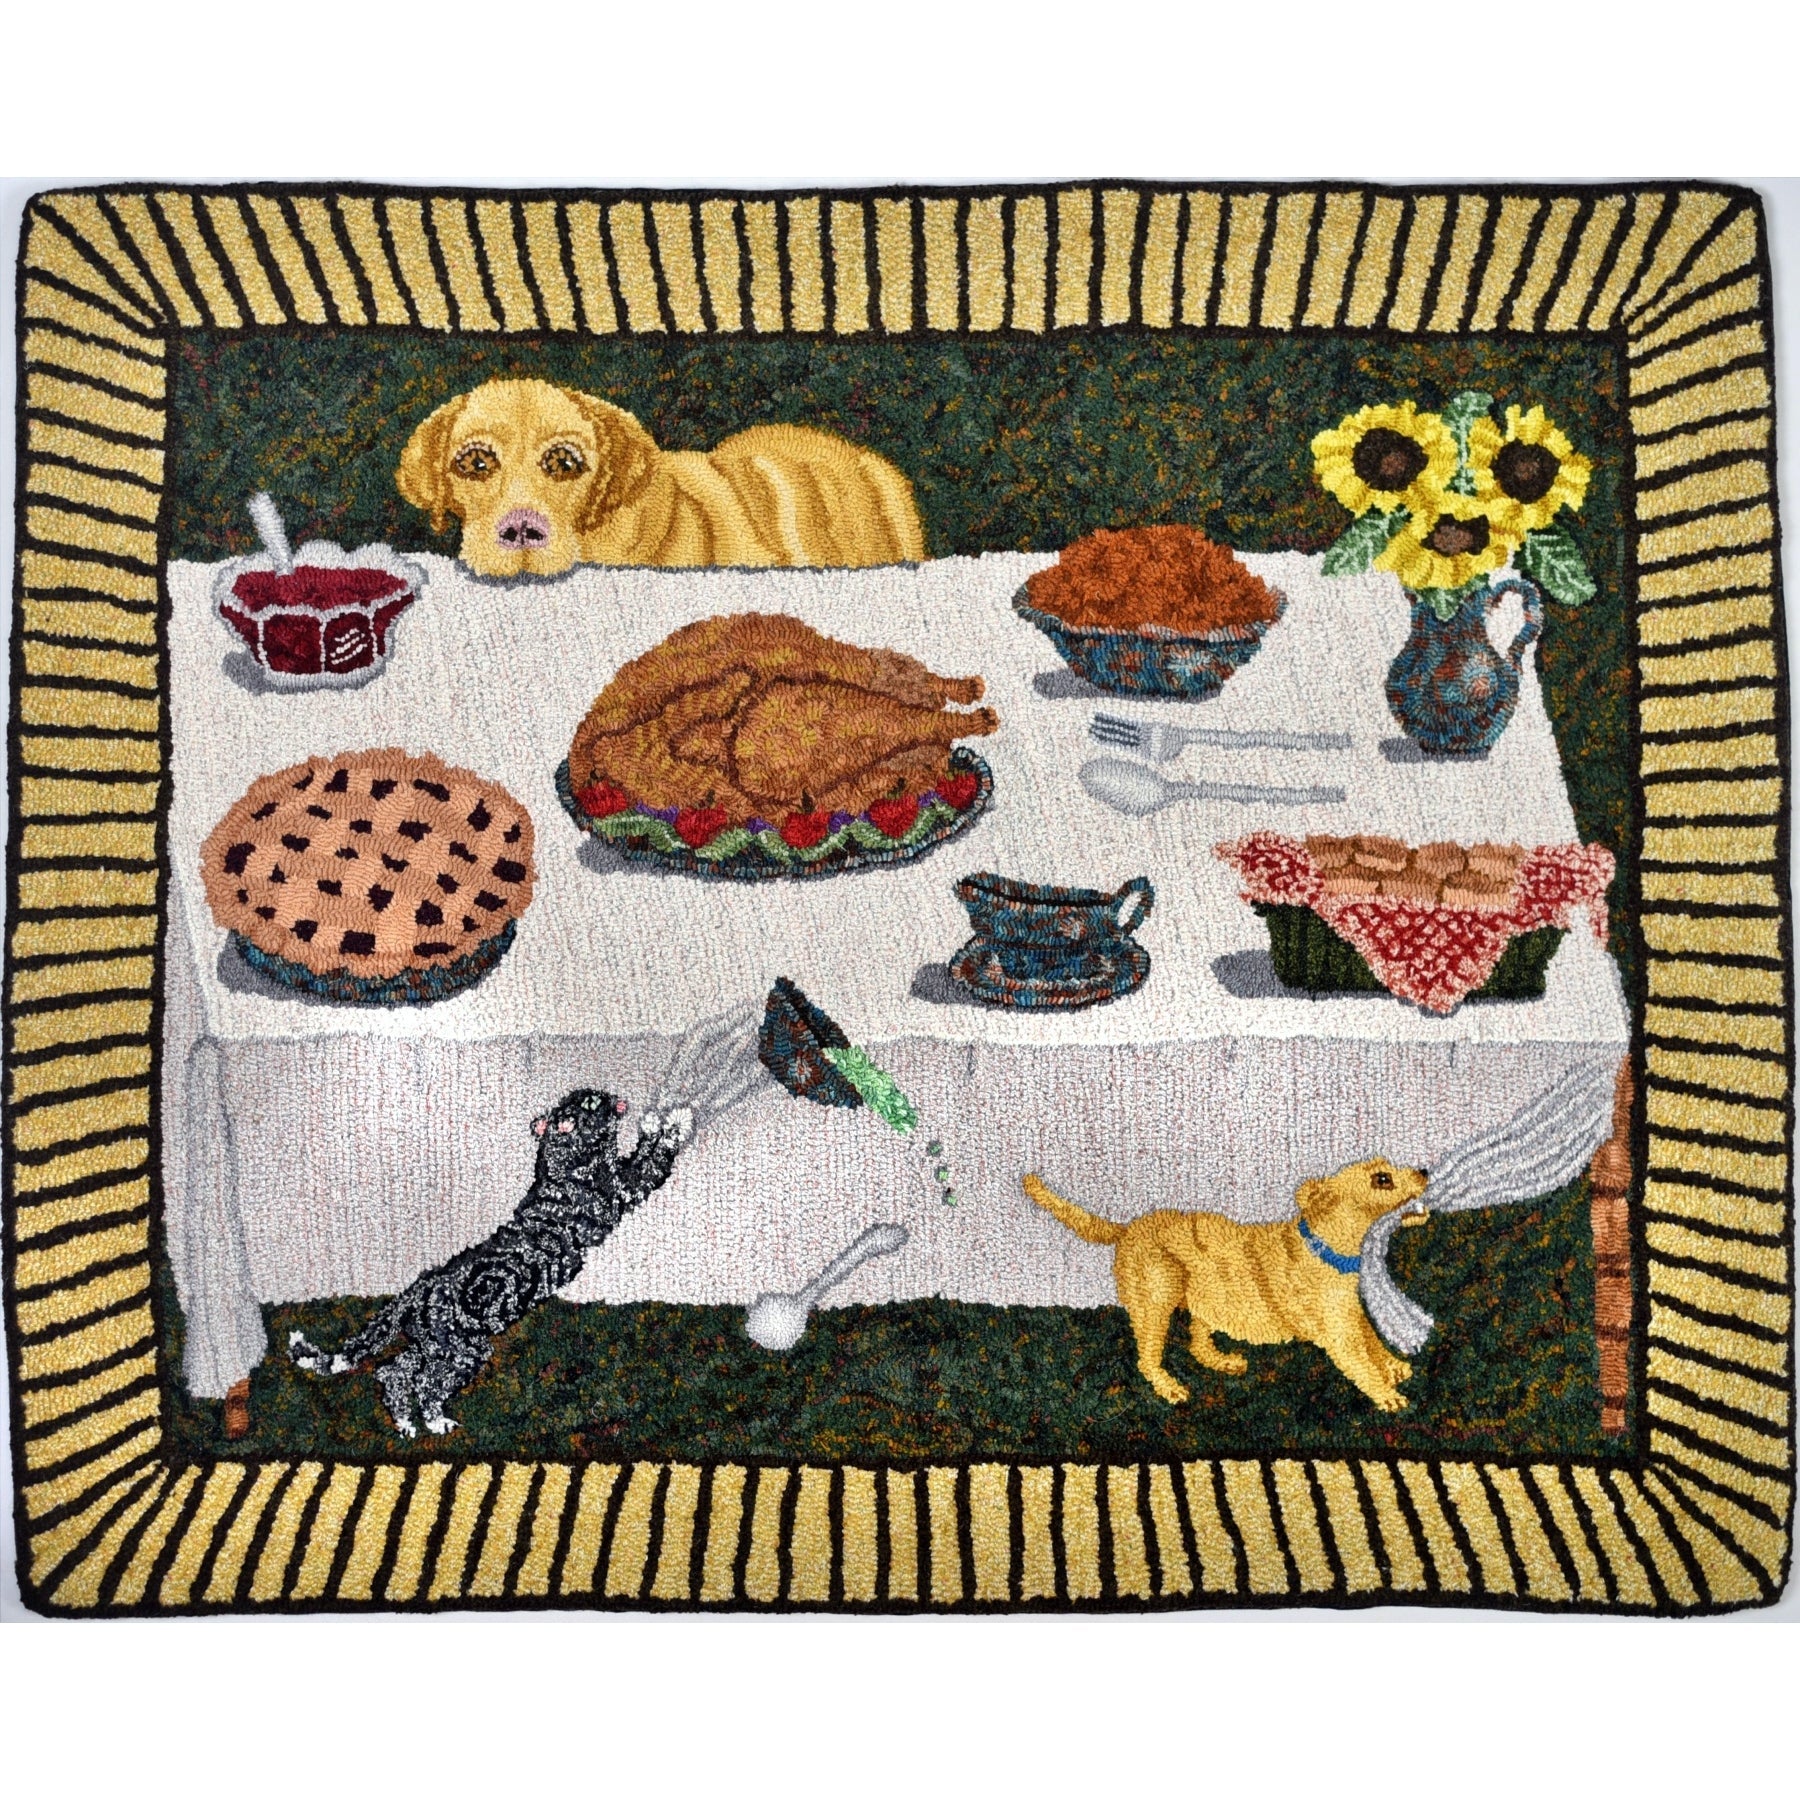 Turkey!, rug hooked by John Leonard